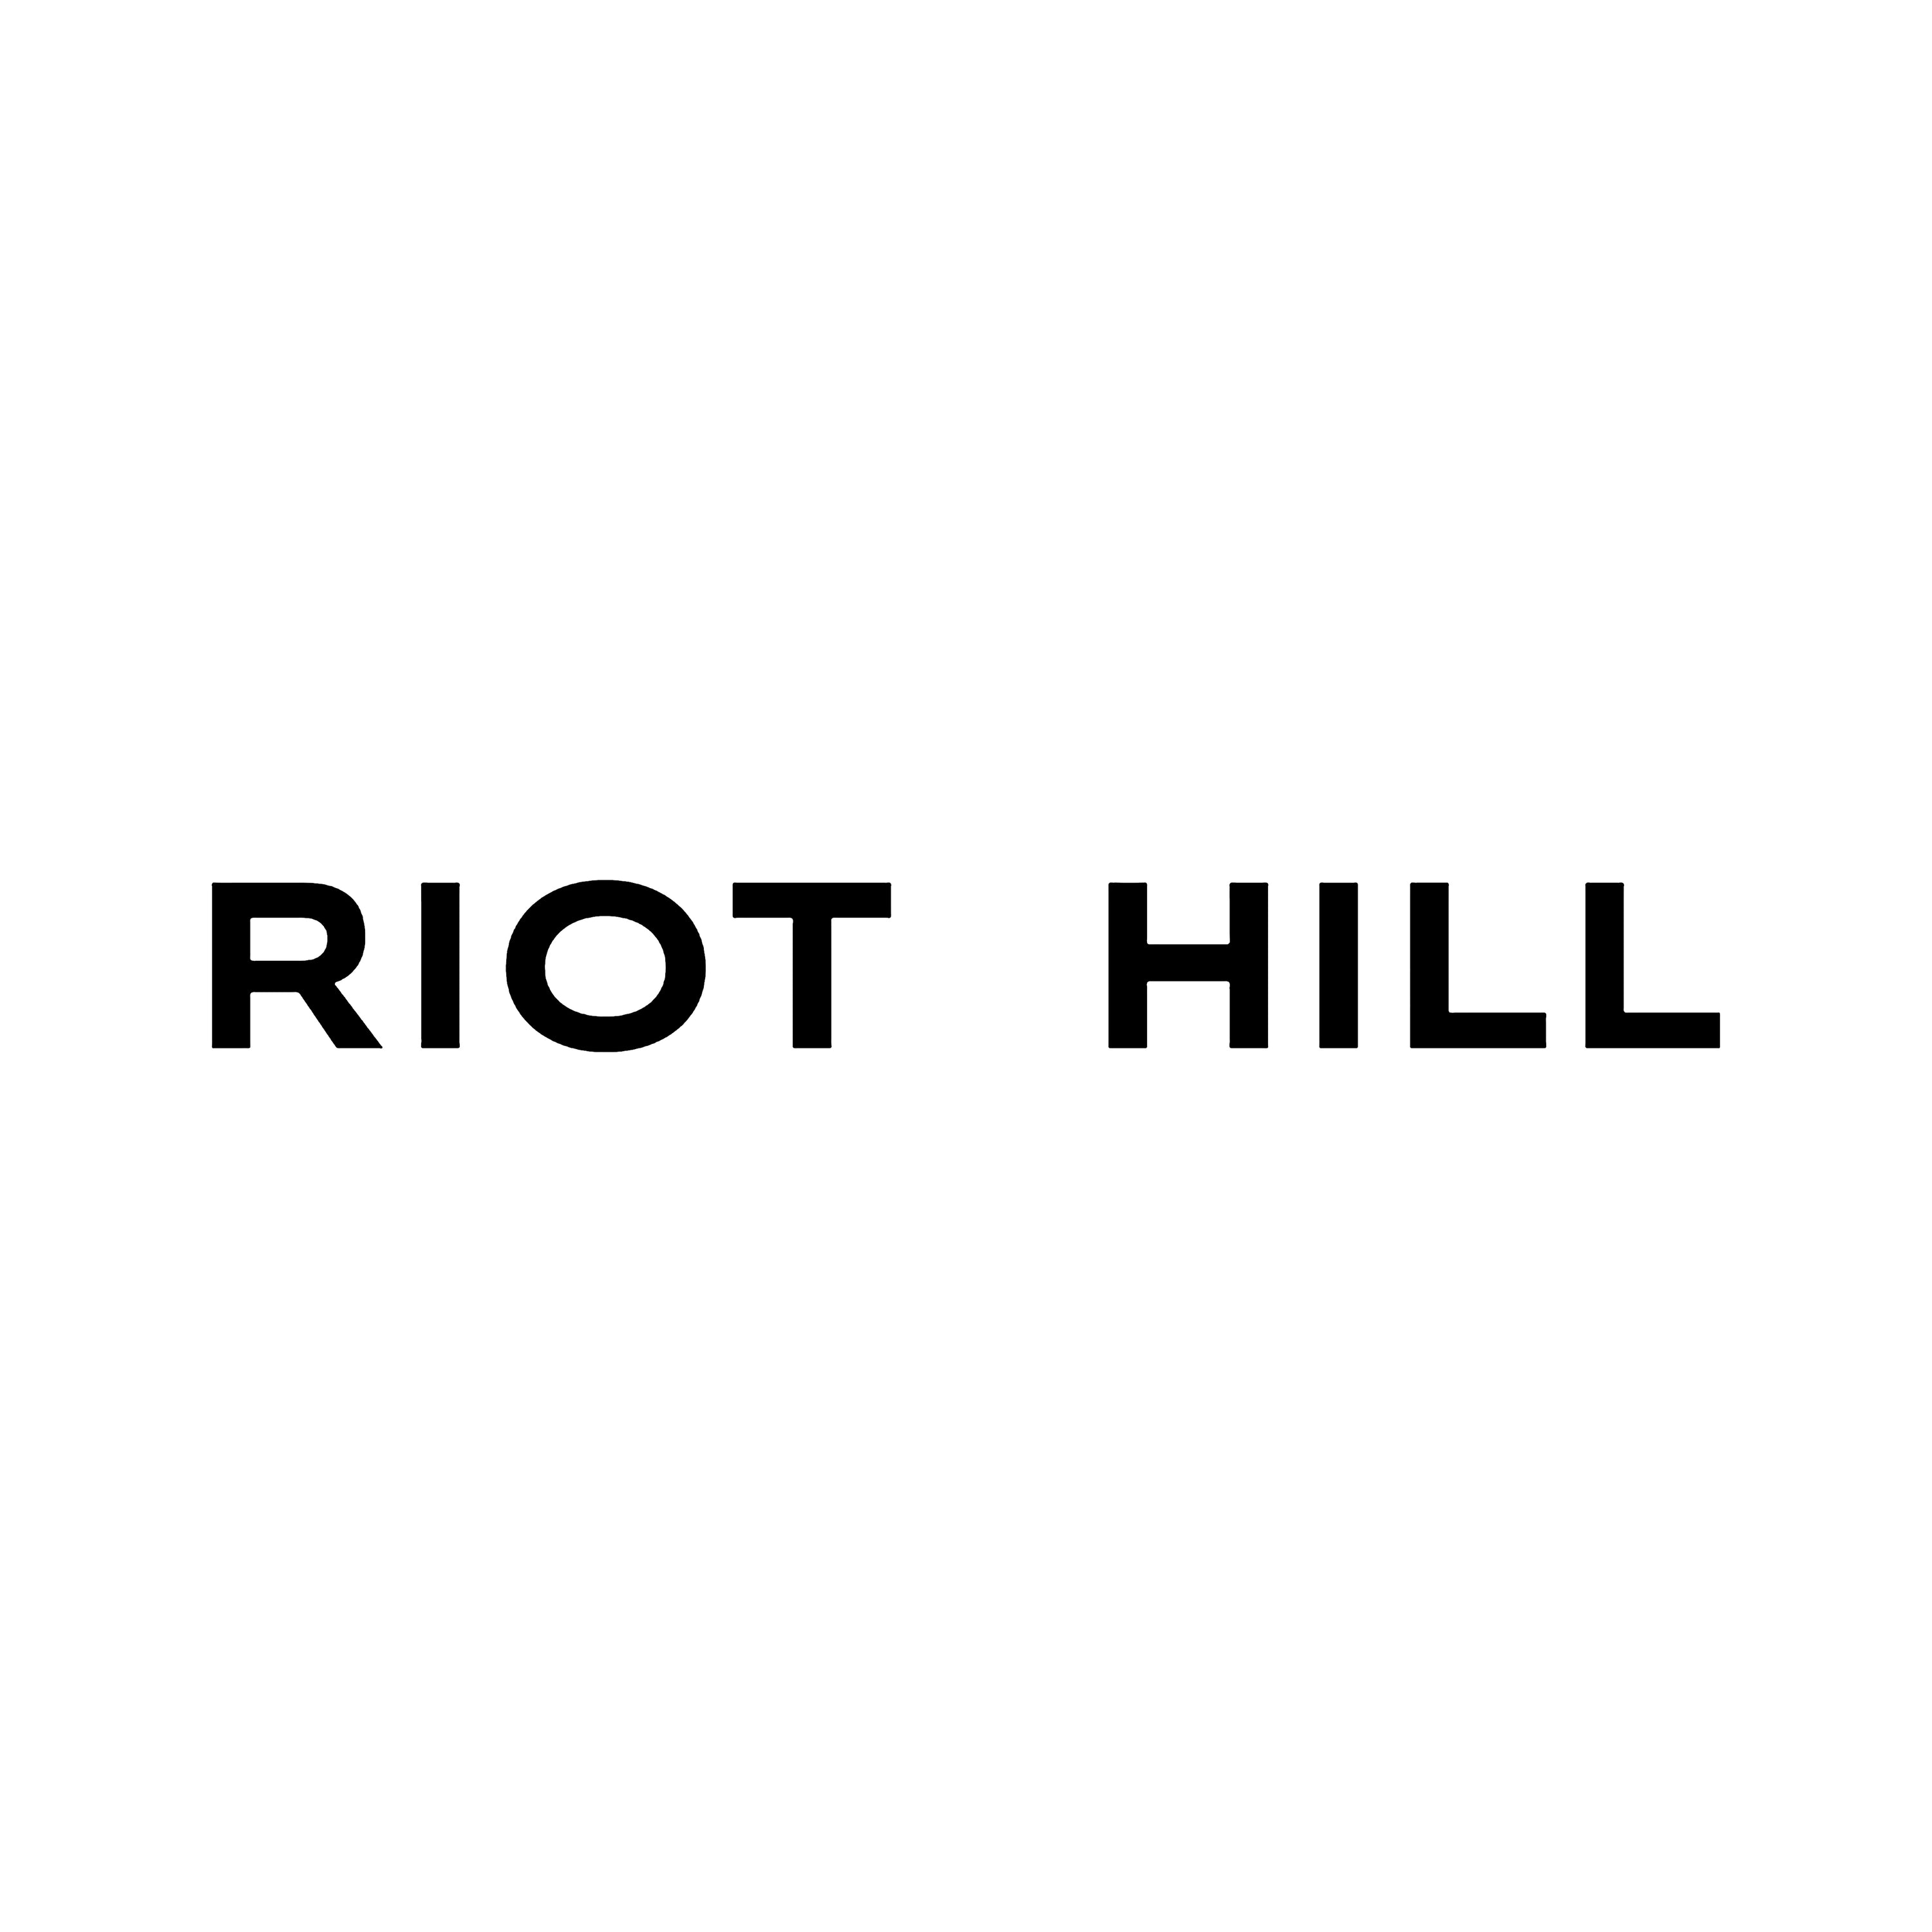 Riot Hill